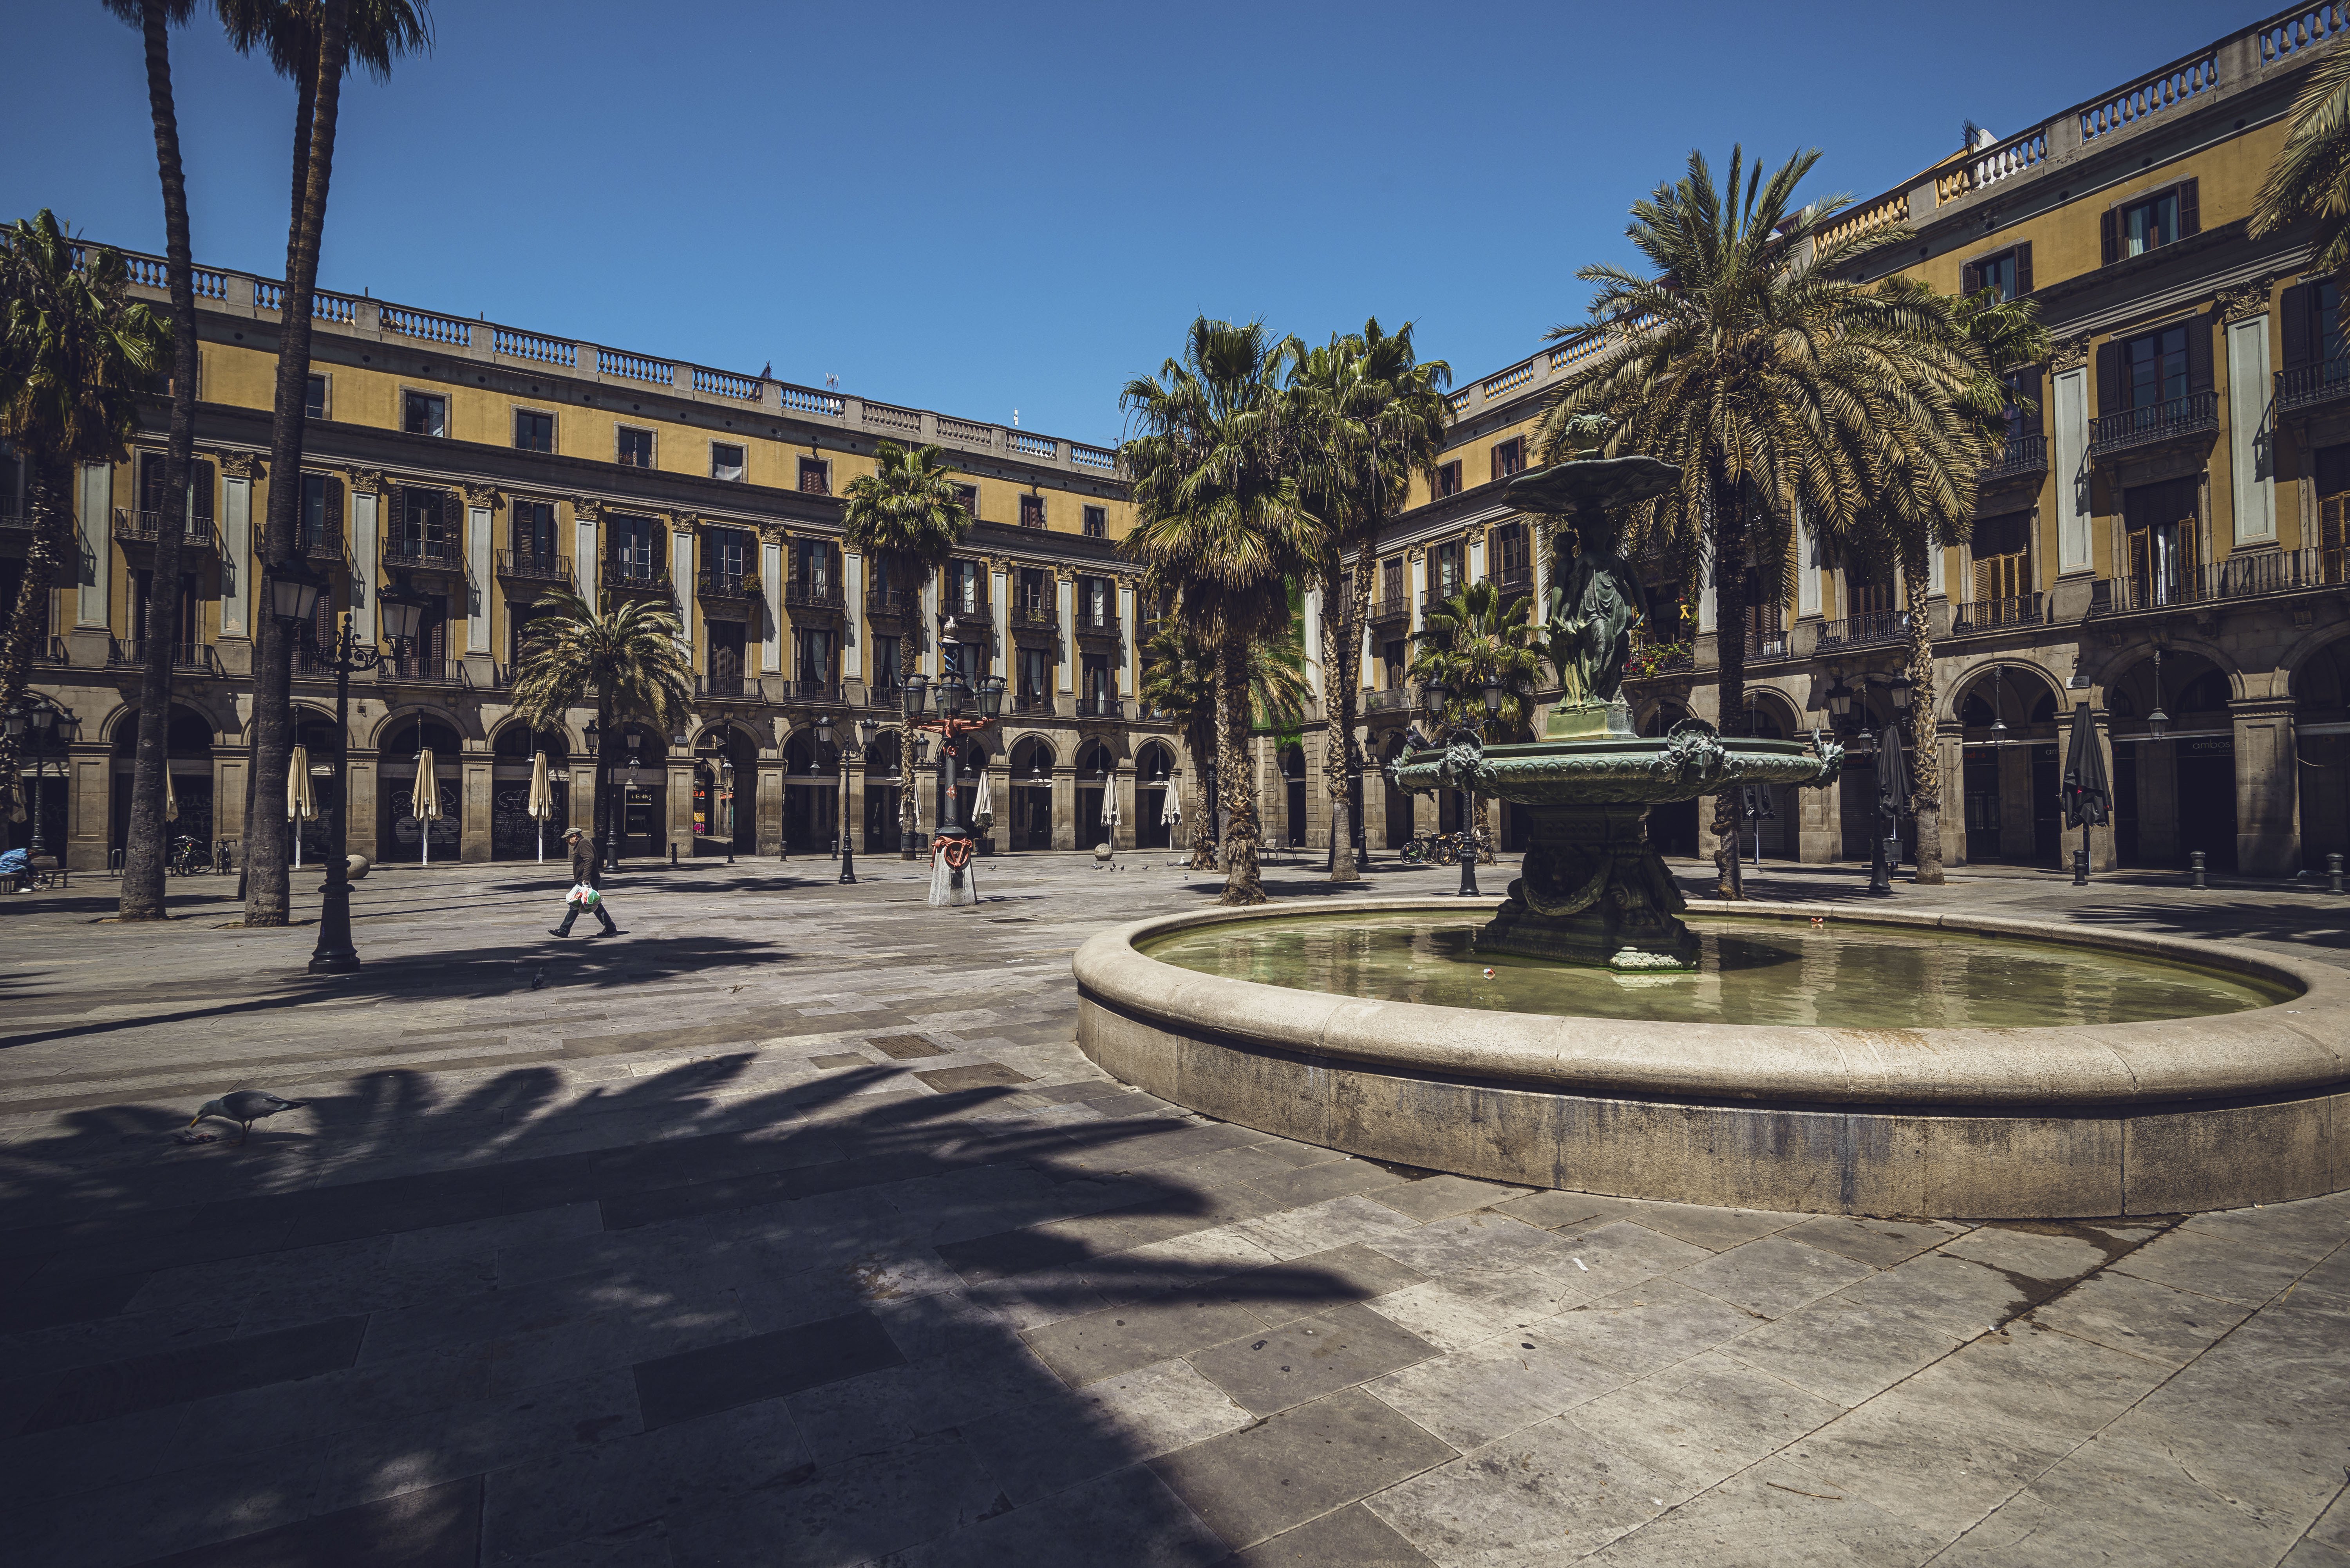 La Plaça Reial de Barcelona en una imatge d'arxiu / Matthias Oesterle / dpa